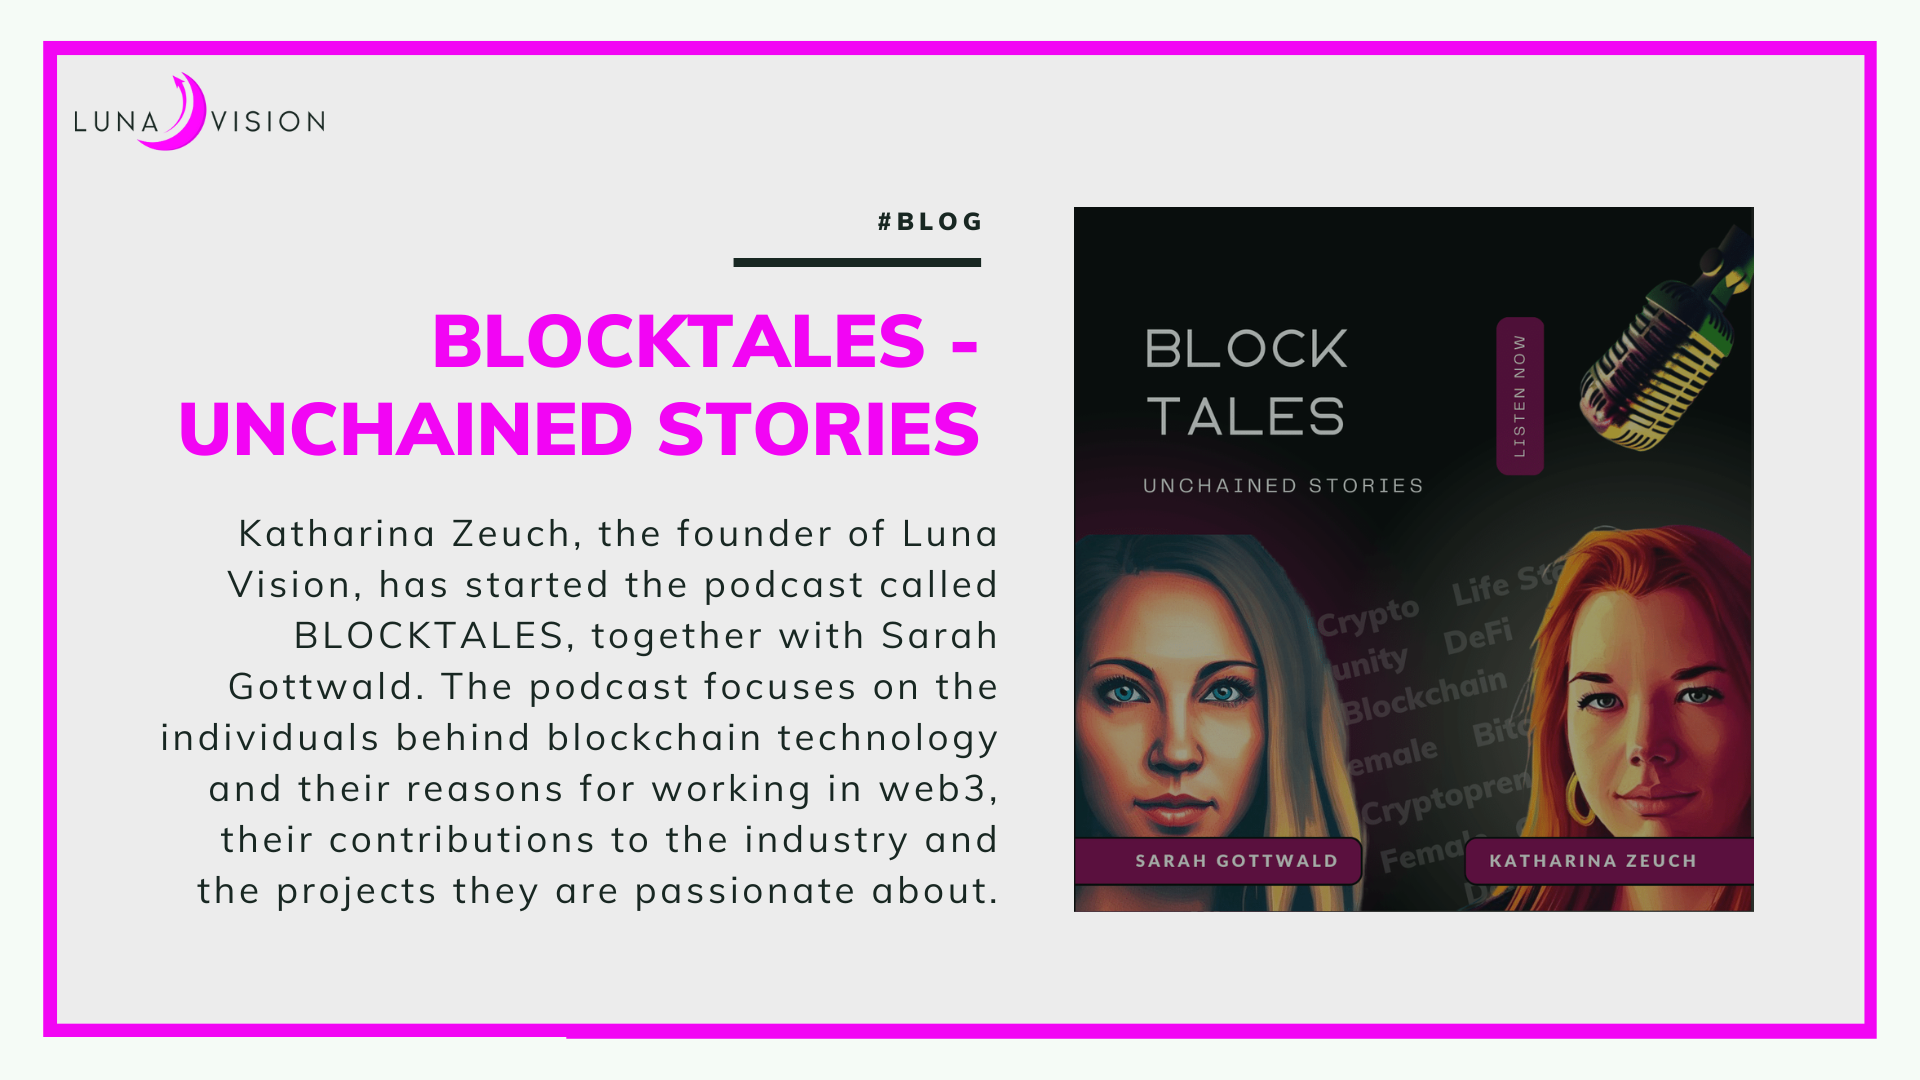 Blocktales – Unchained Stories.